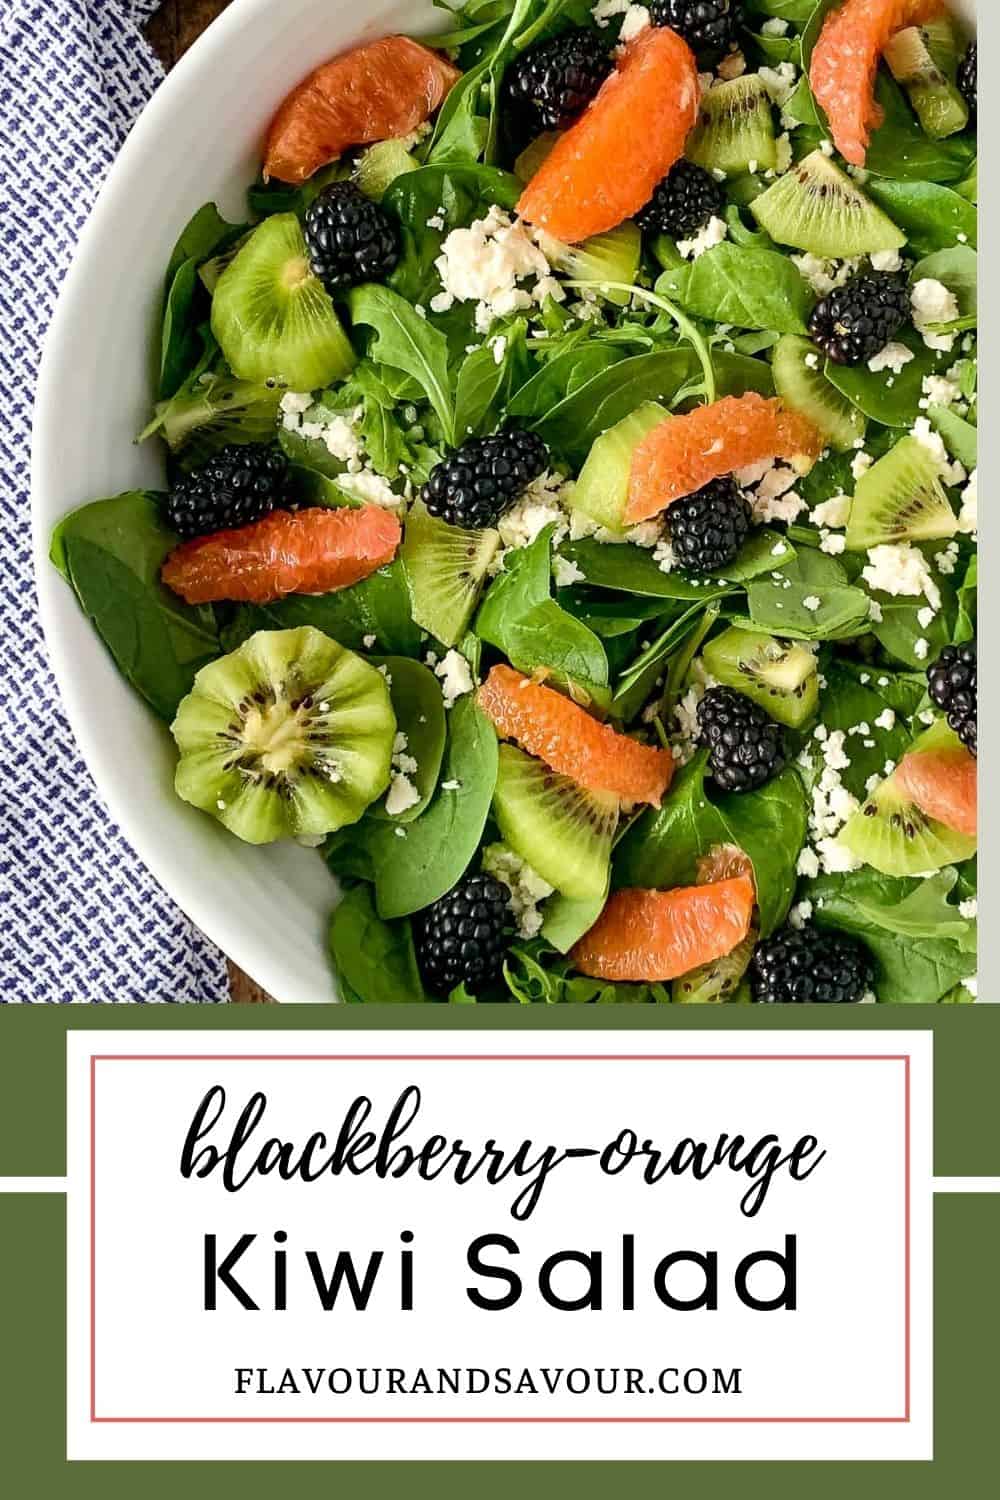 image and text for blackberry orange kiwi salad